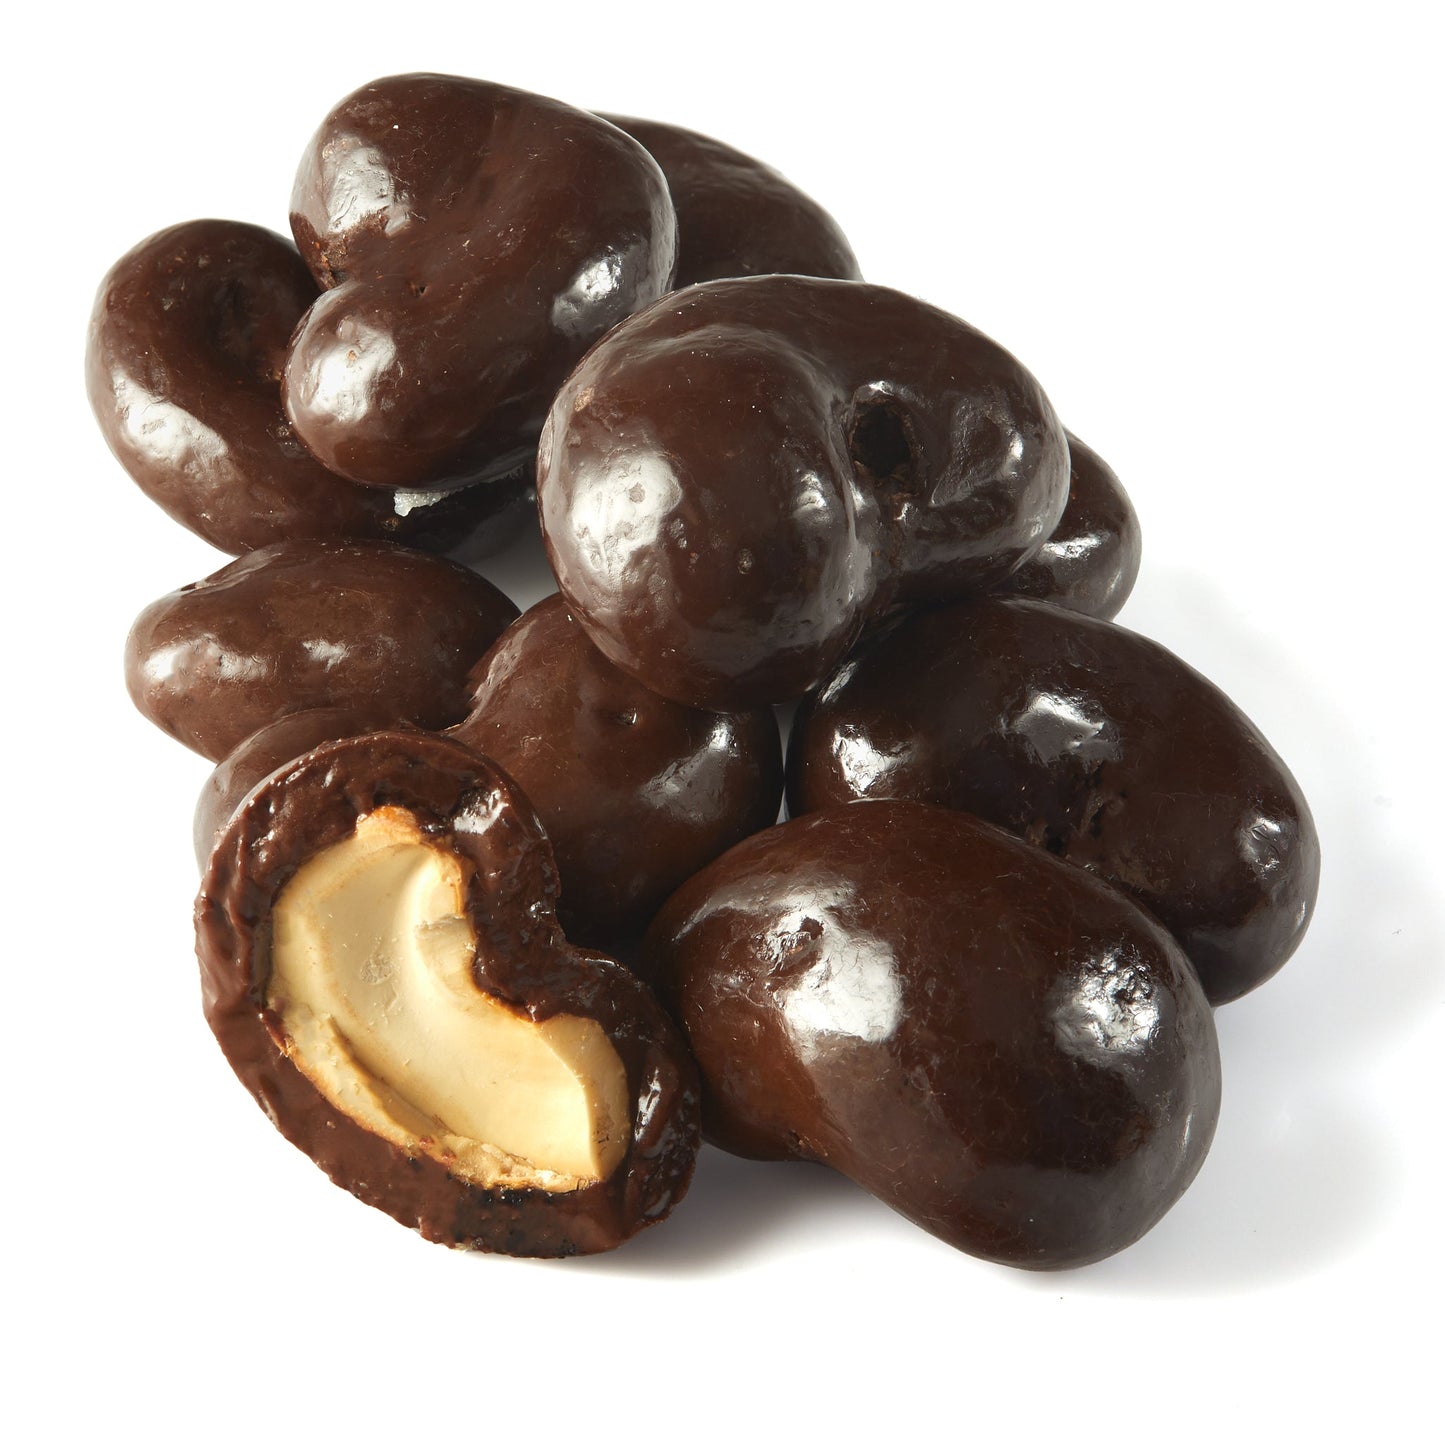 Chocolate Covered Cashews | Kosher for Passover